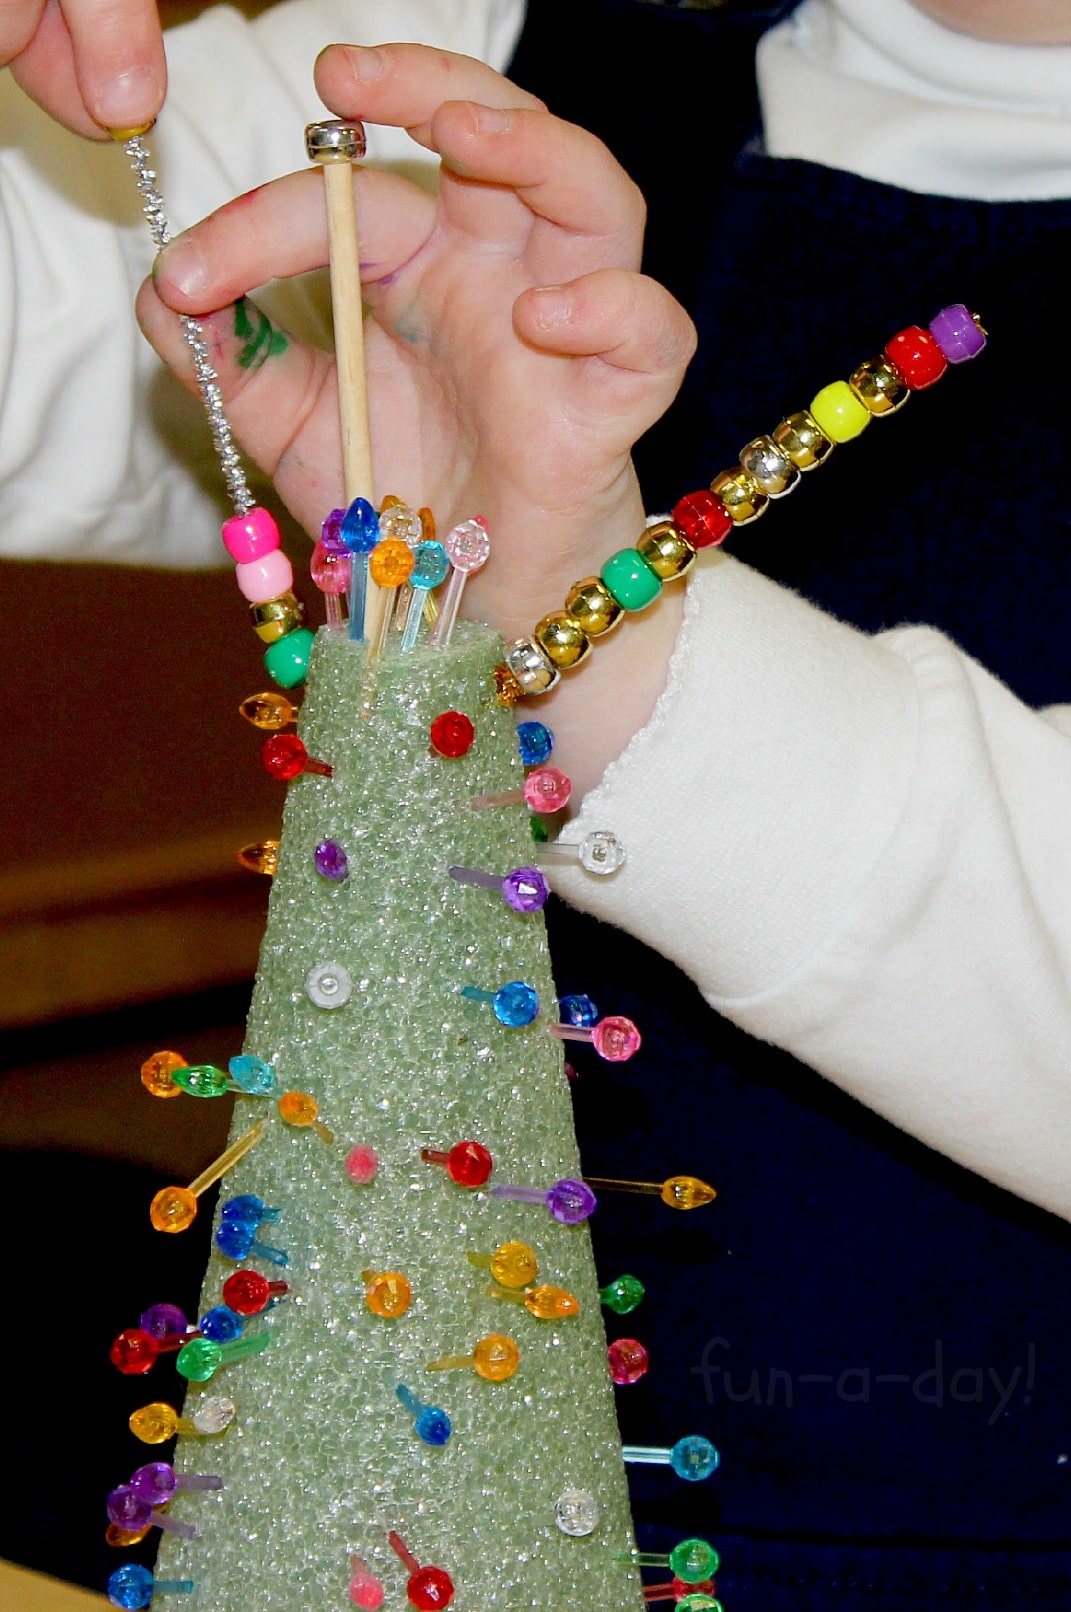 Child adding beads and lights to a styrofoam tree